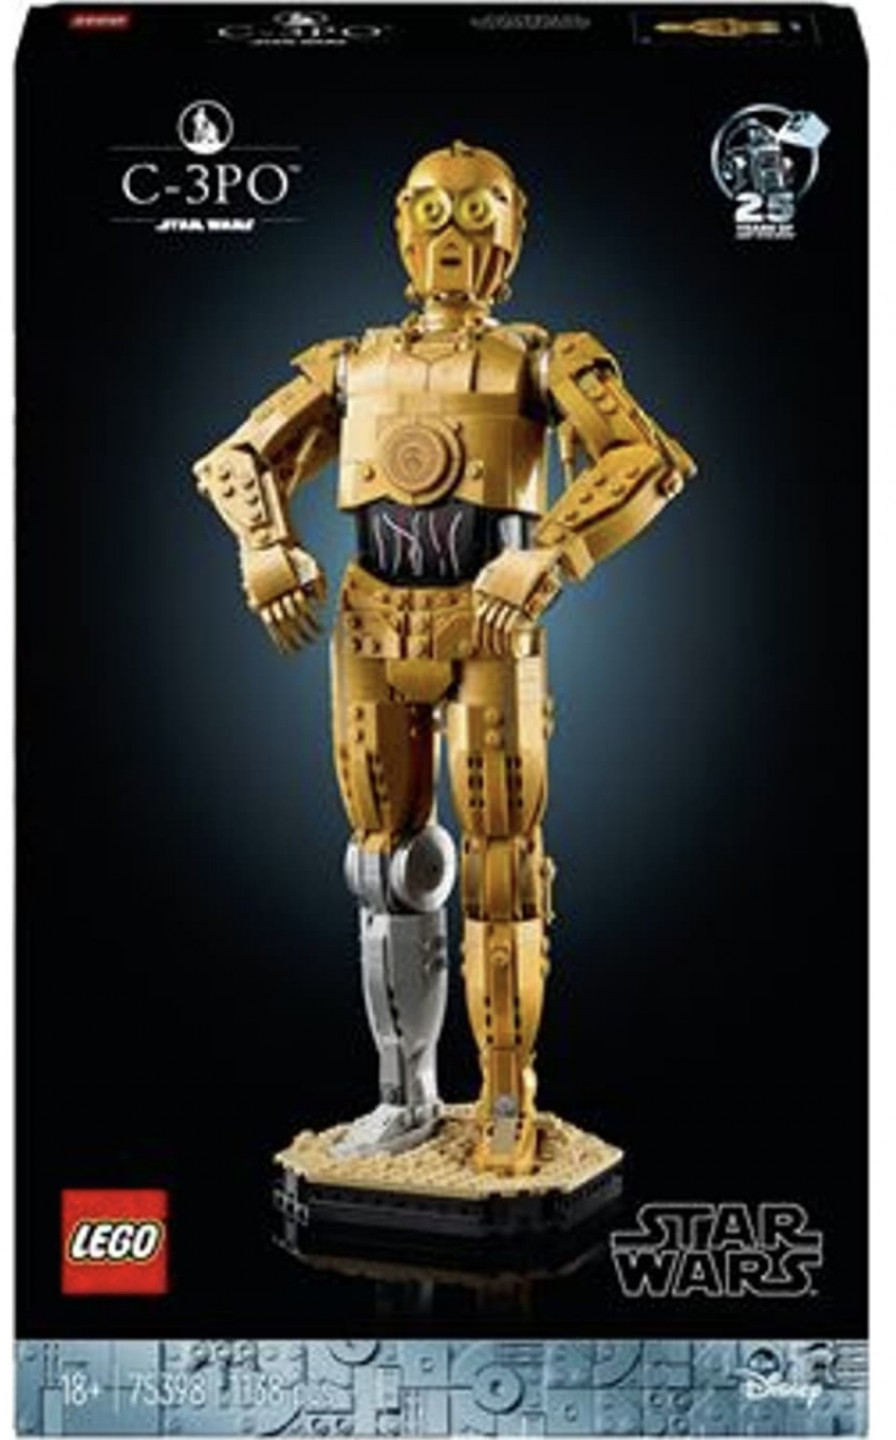 LEGO Star Wars 75398 Buildable C-3PO komt op 1 augustus